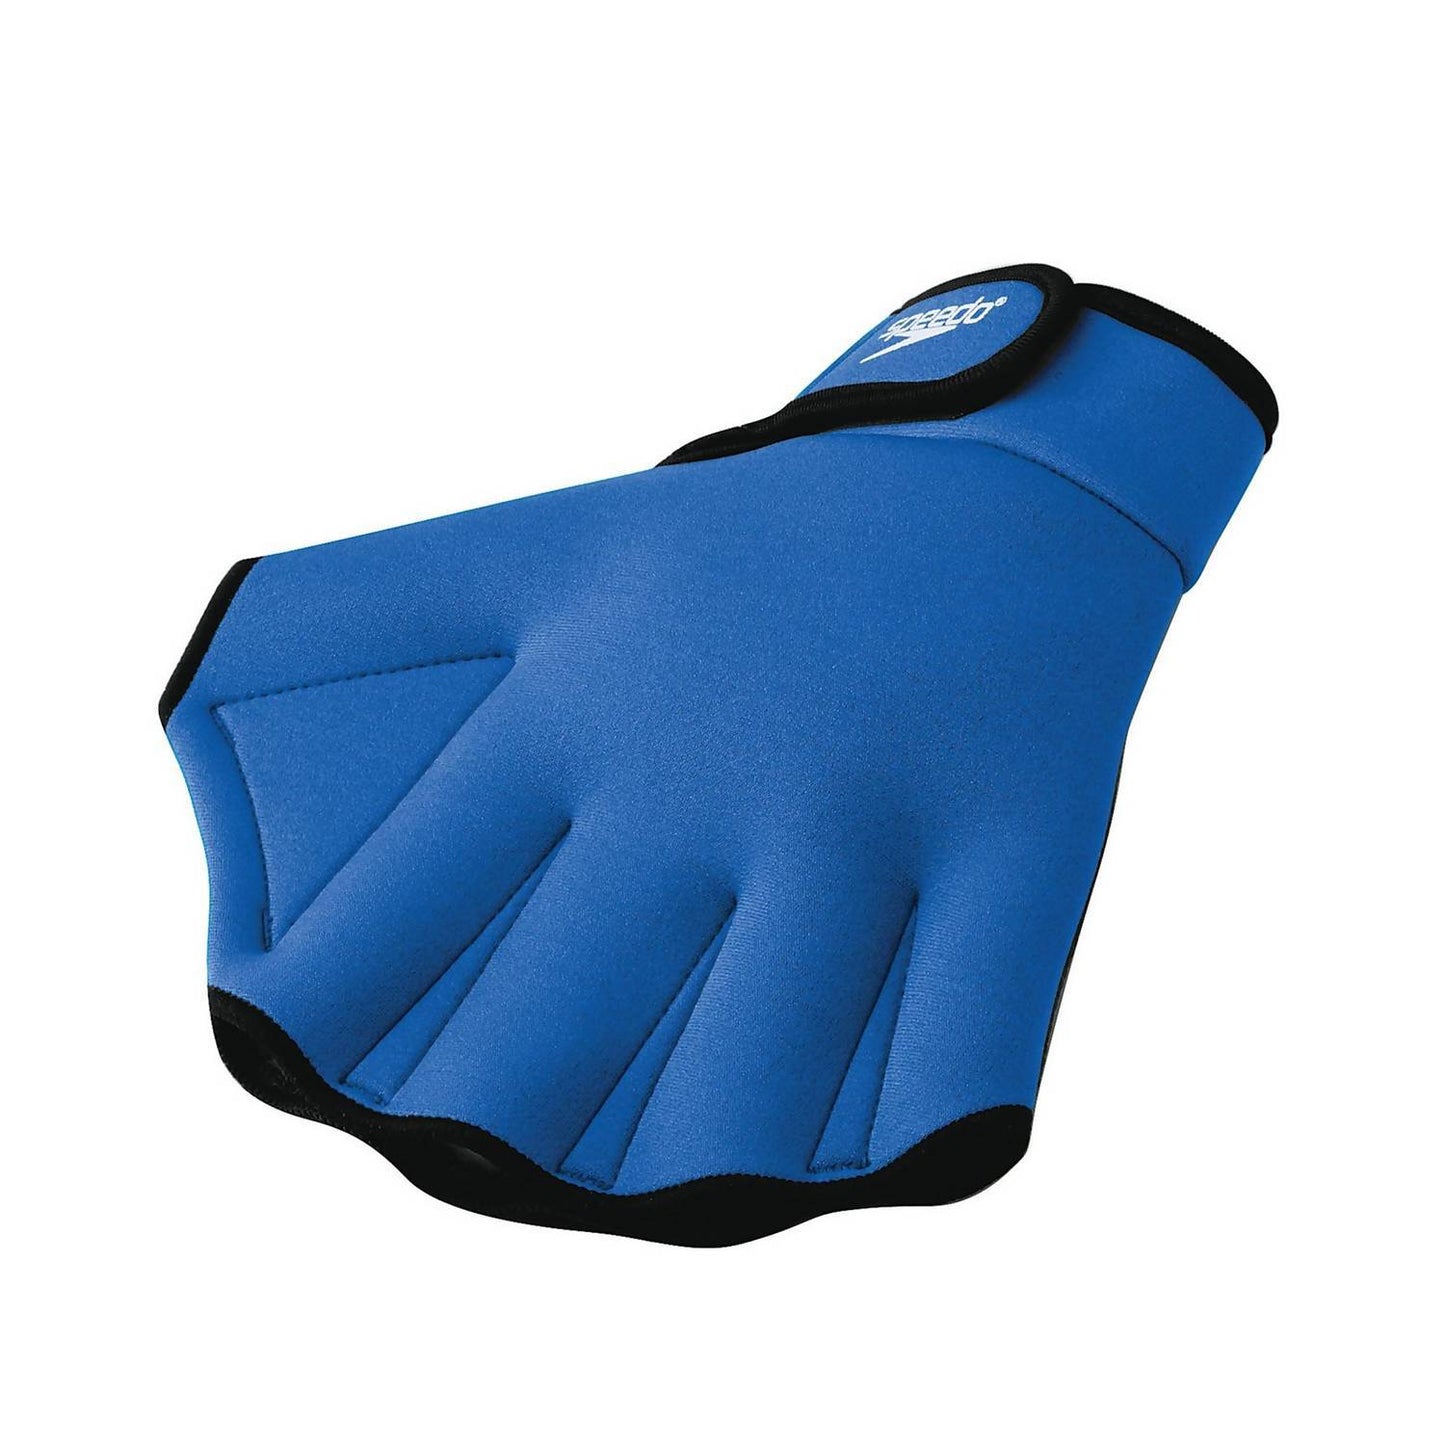 Speedo M Royal Blue Aquatic Fitness Gloves